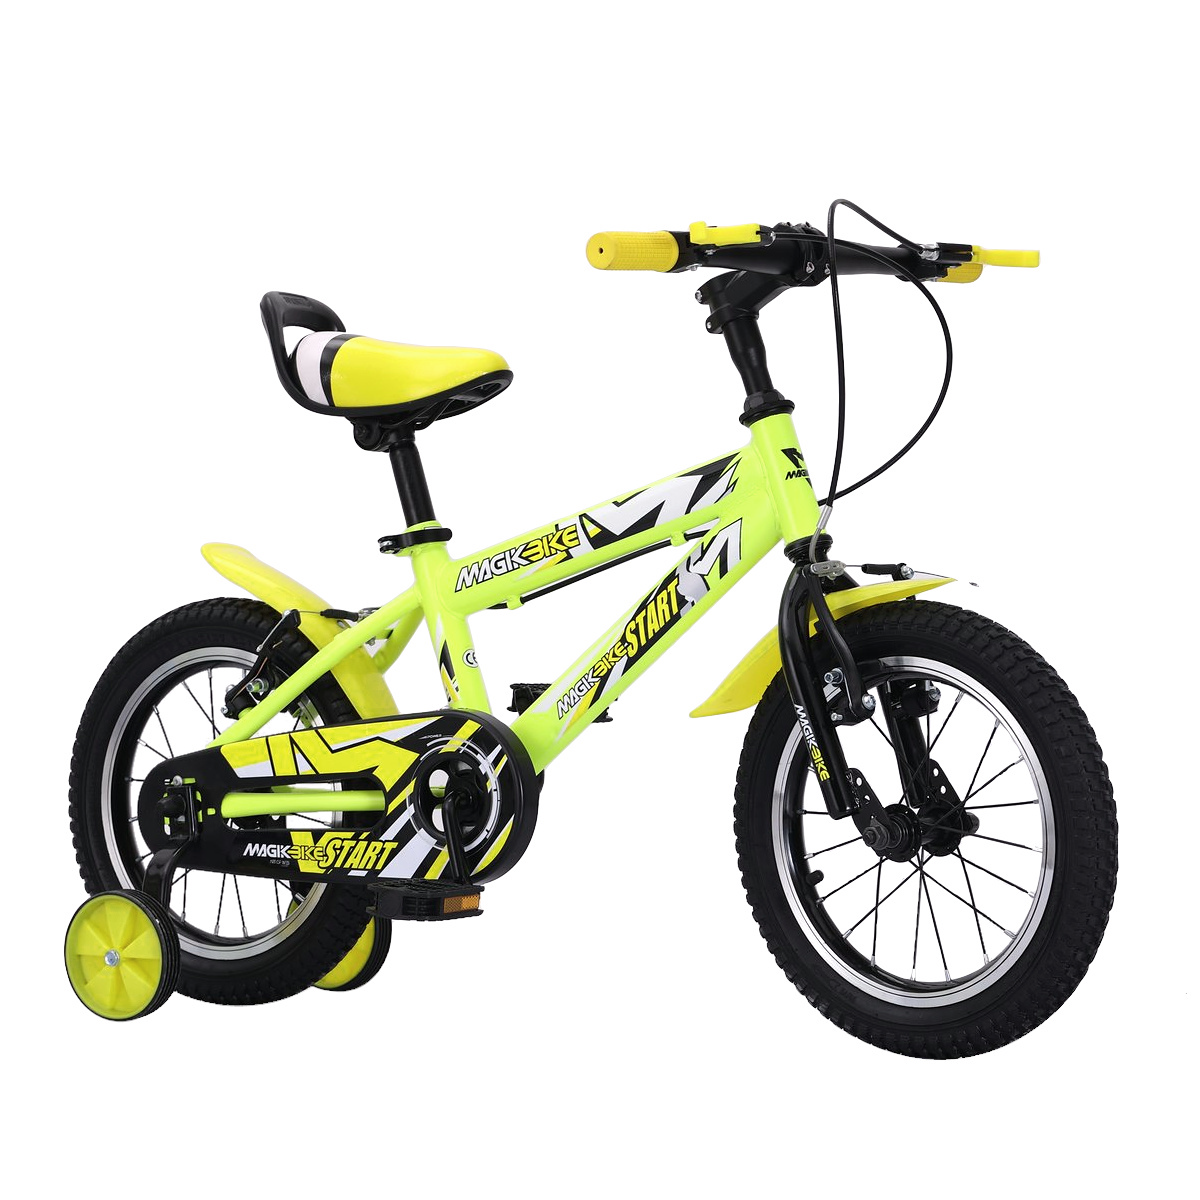 Bicicleta Niños 12 Pulgadas Magikbike Start 3-5 Años - amarillo - 